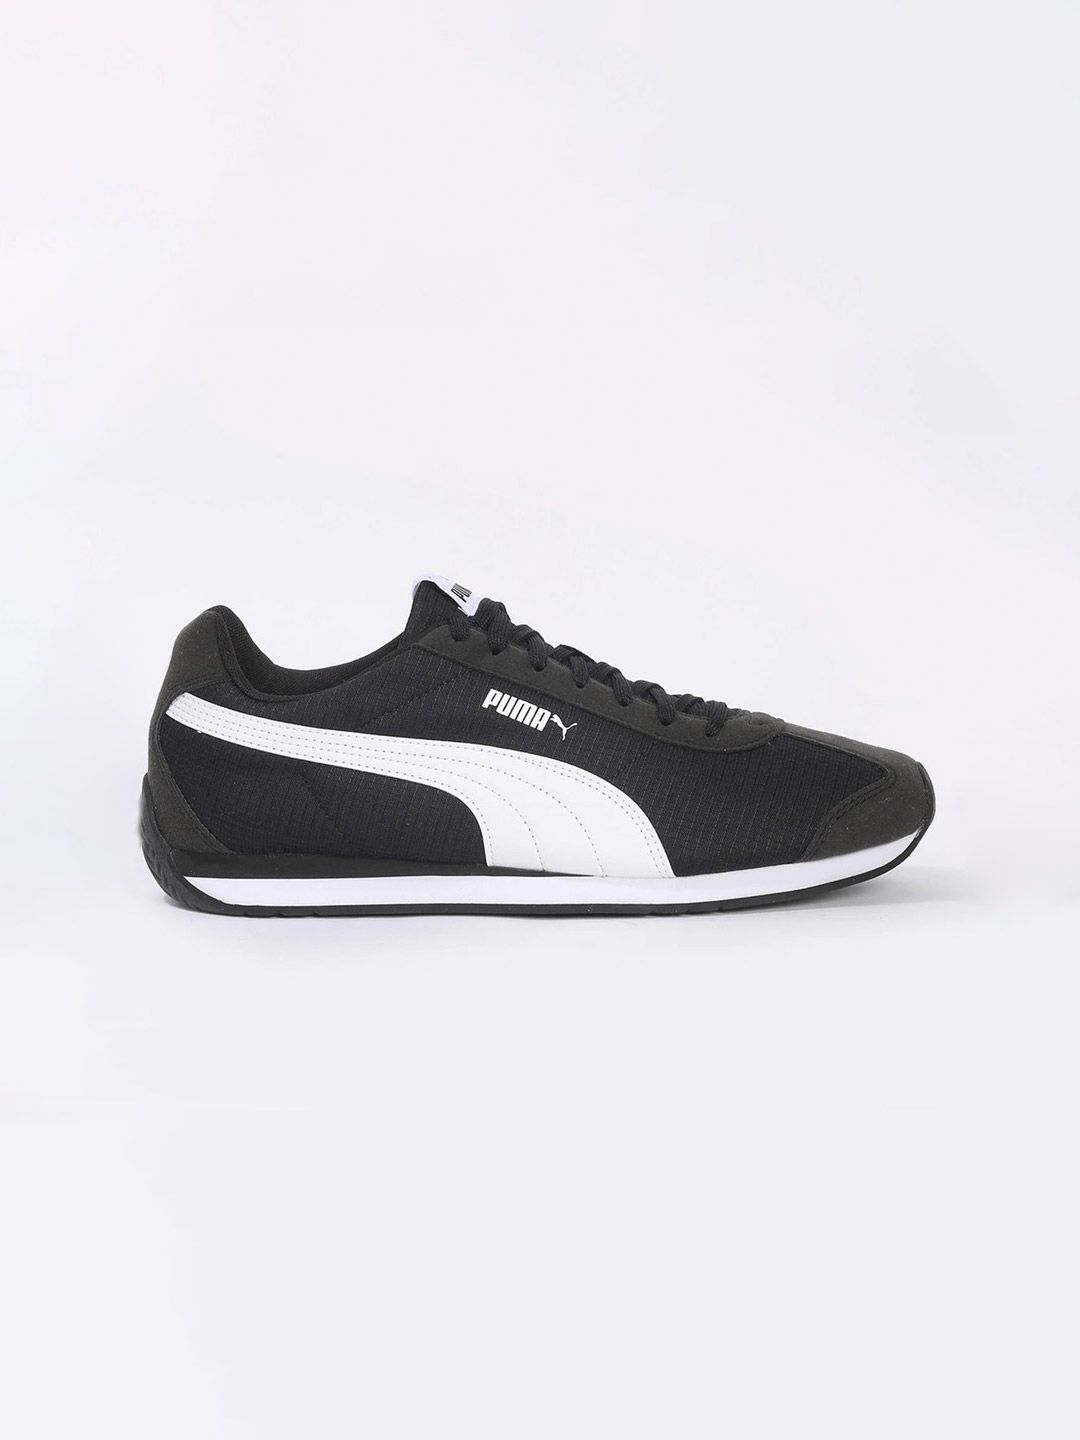 Buy Men Black & White Turin 3 Sneakers from Fancode Shop.